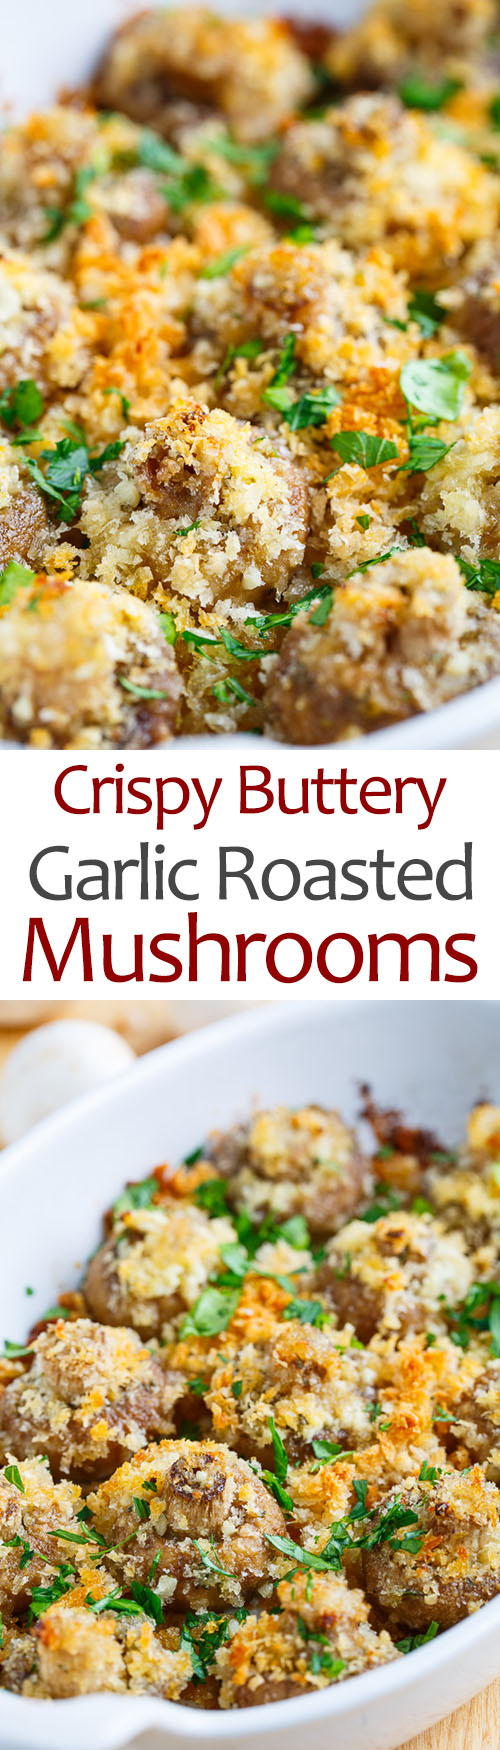 Crispy Buttery Garlic Roasted Mushrooms